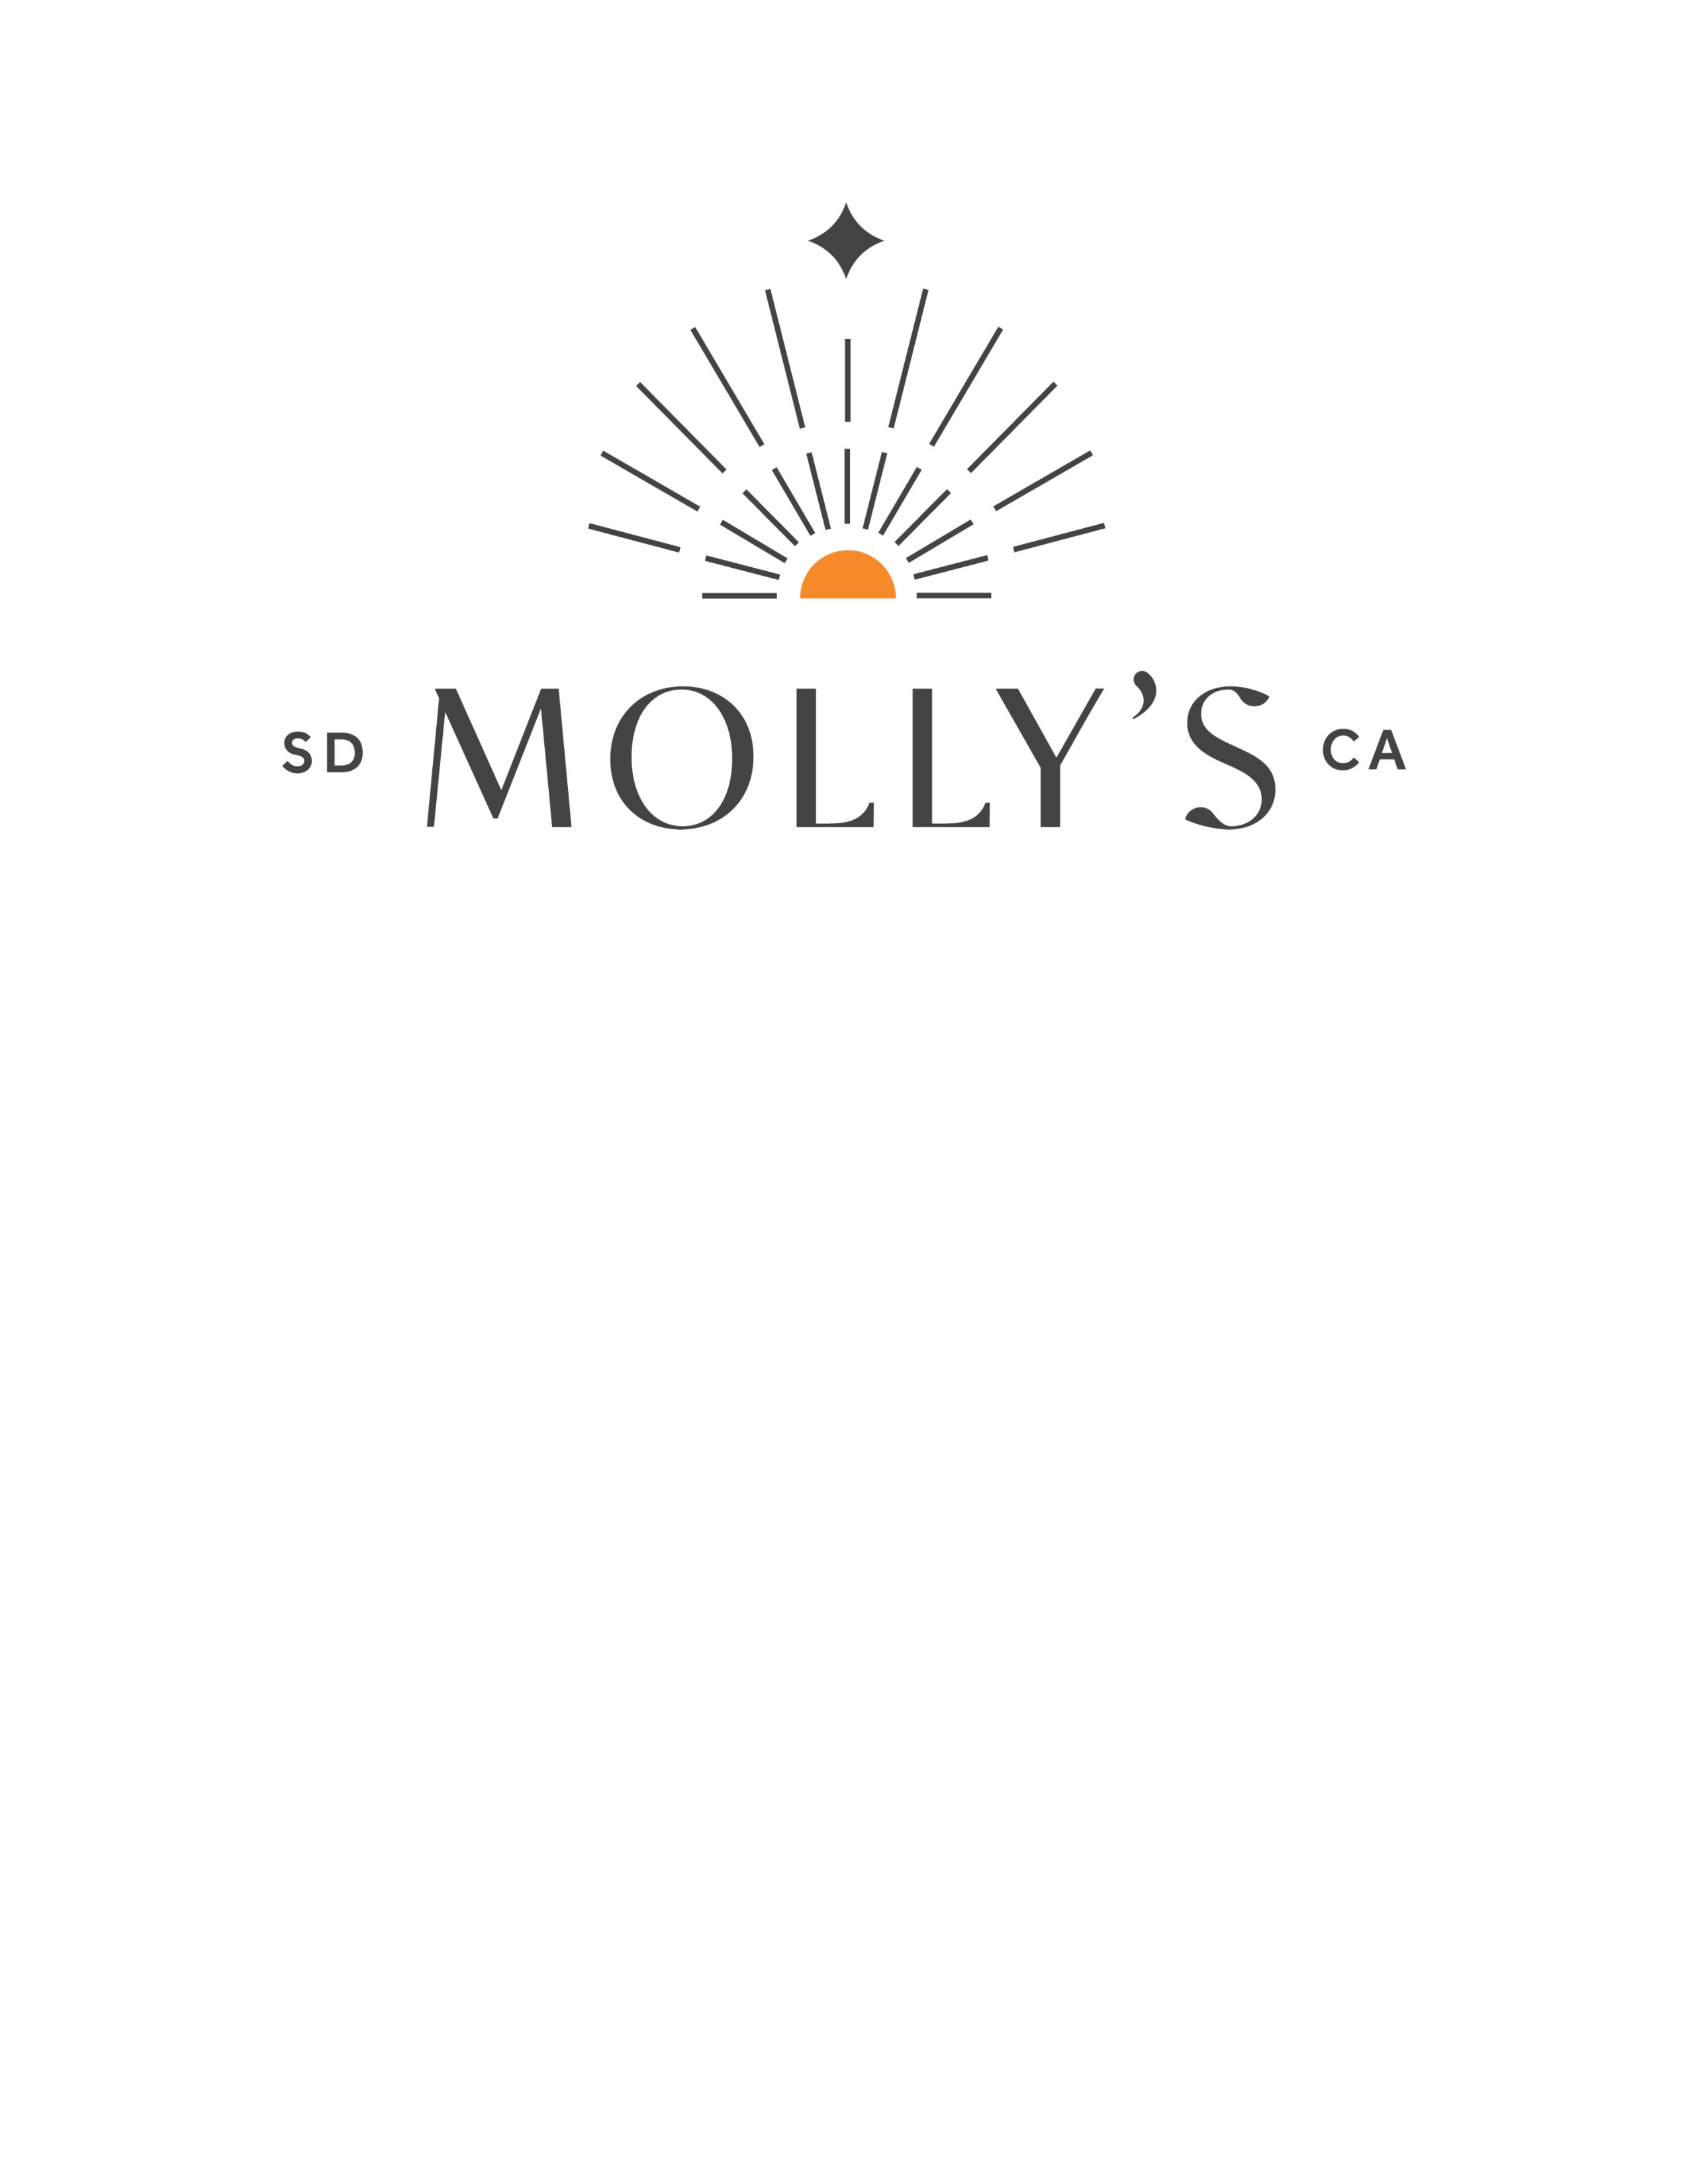 Molly's Mission Beach logo